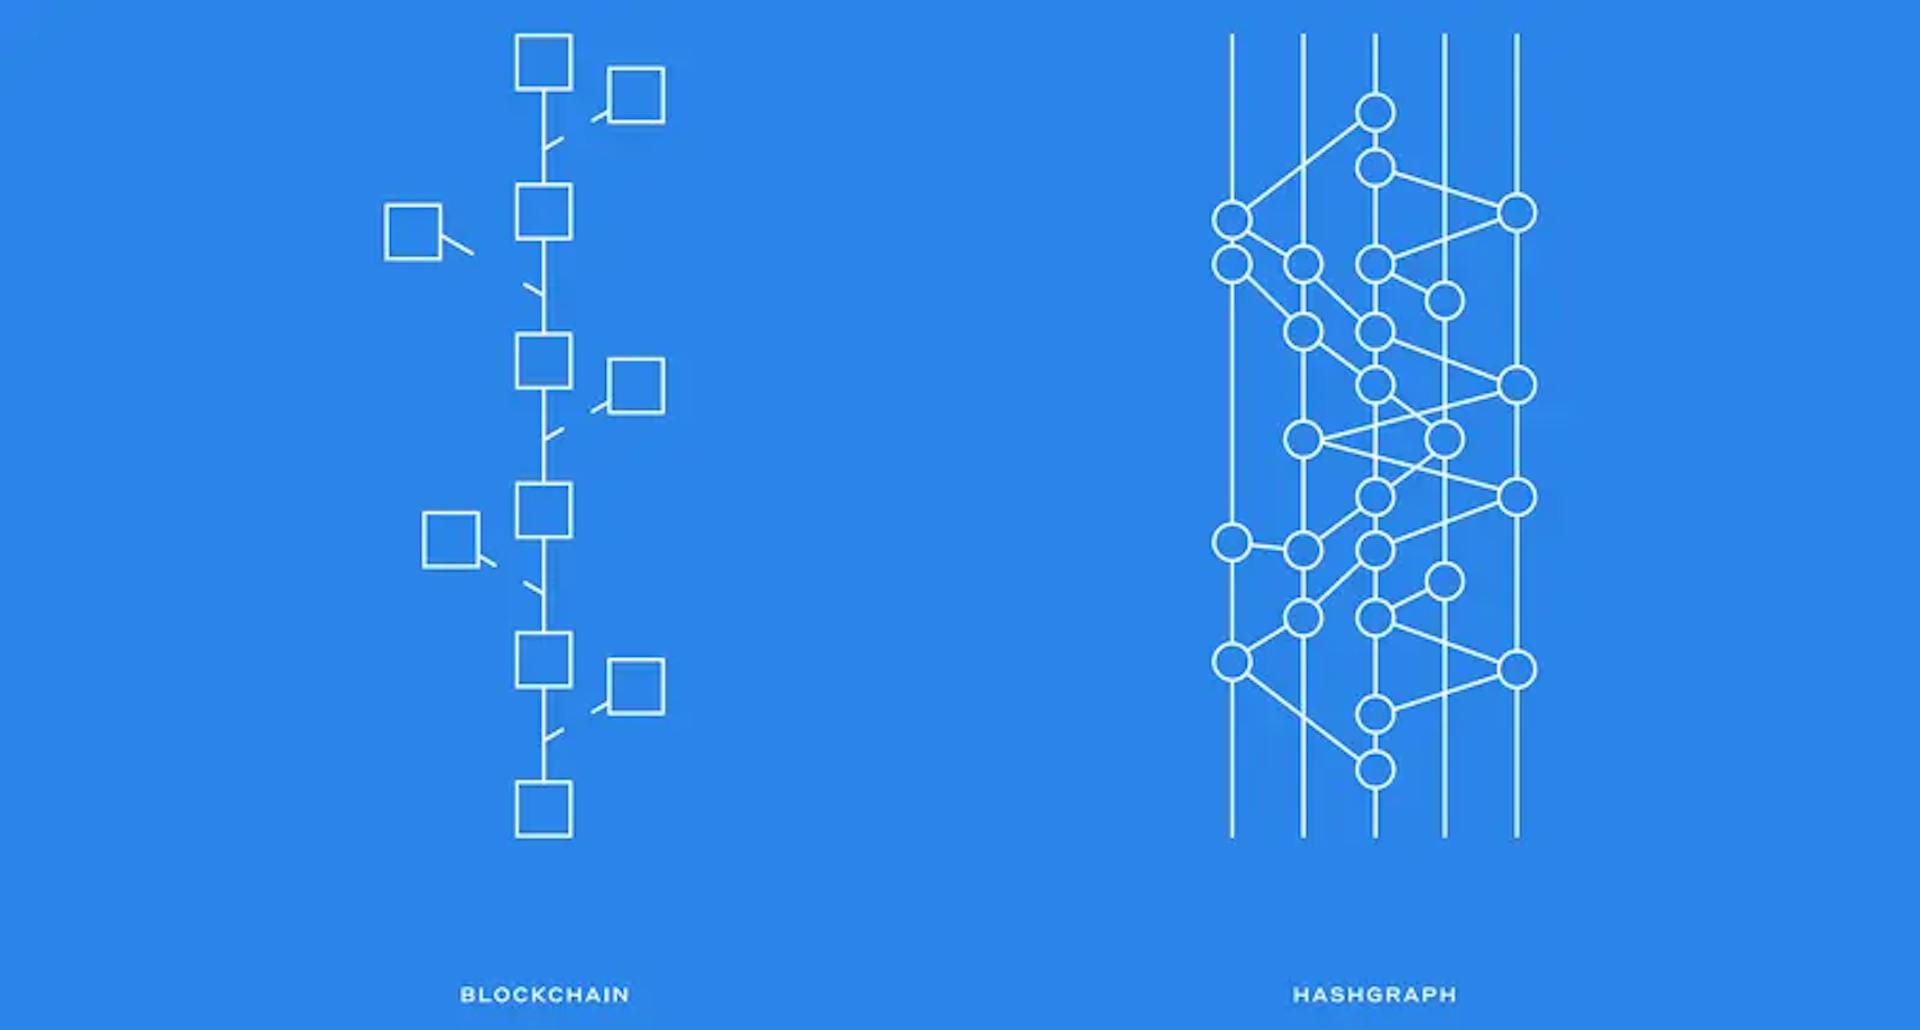 Blockchain vs. Hashgraph. Image by Hedera